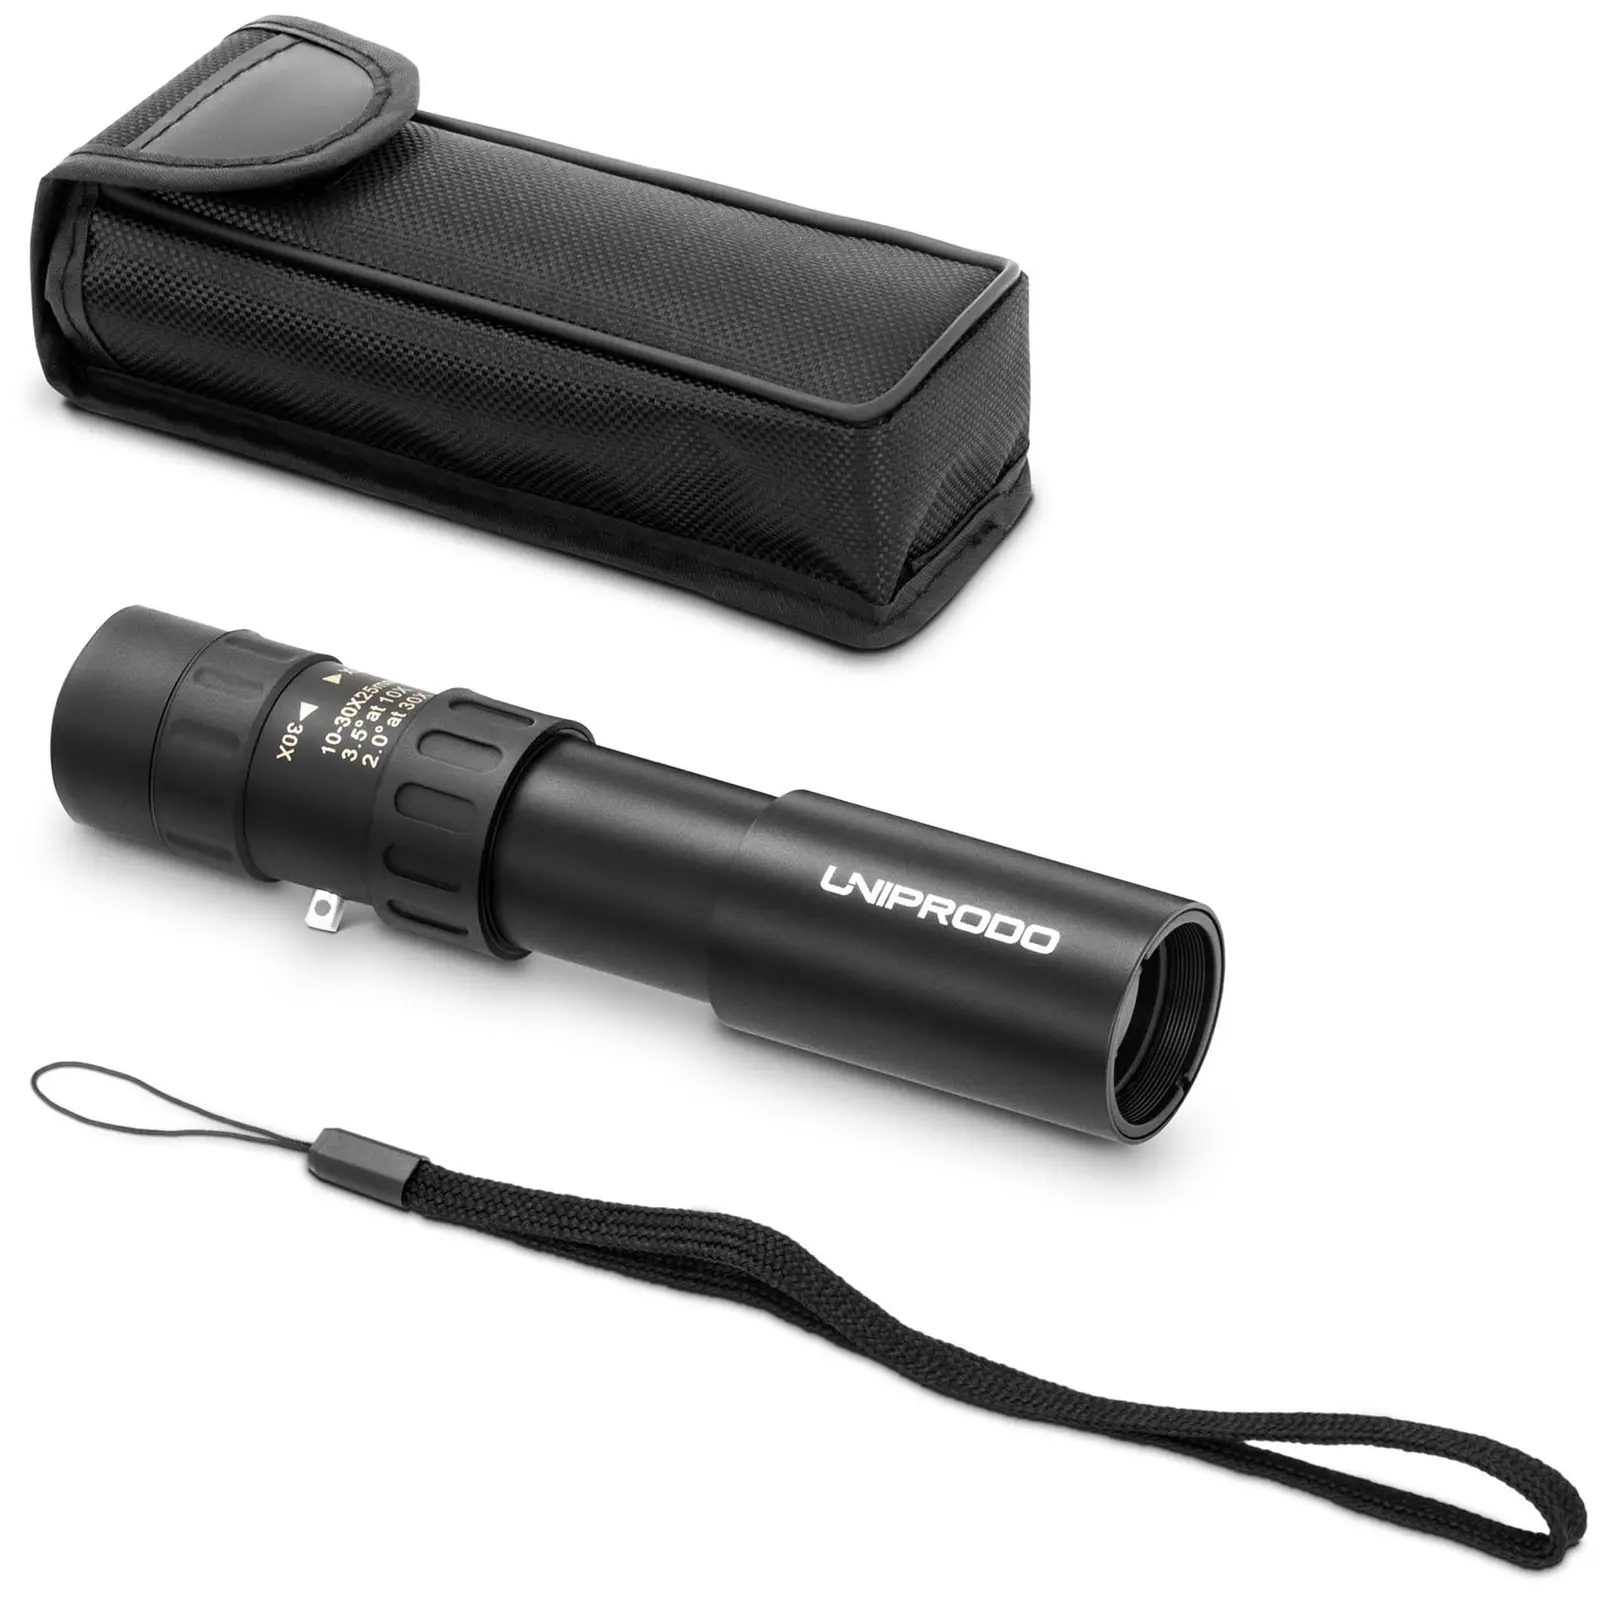 Binoculars - lightweight and compact